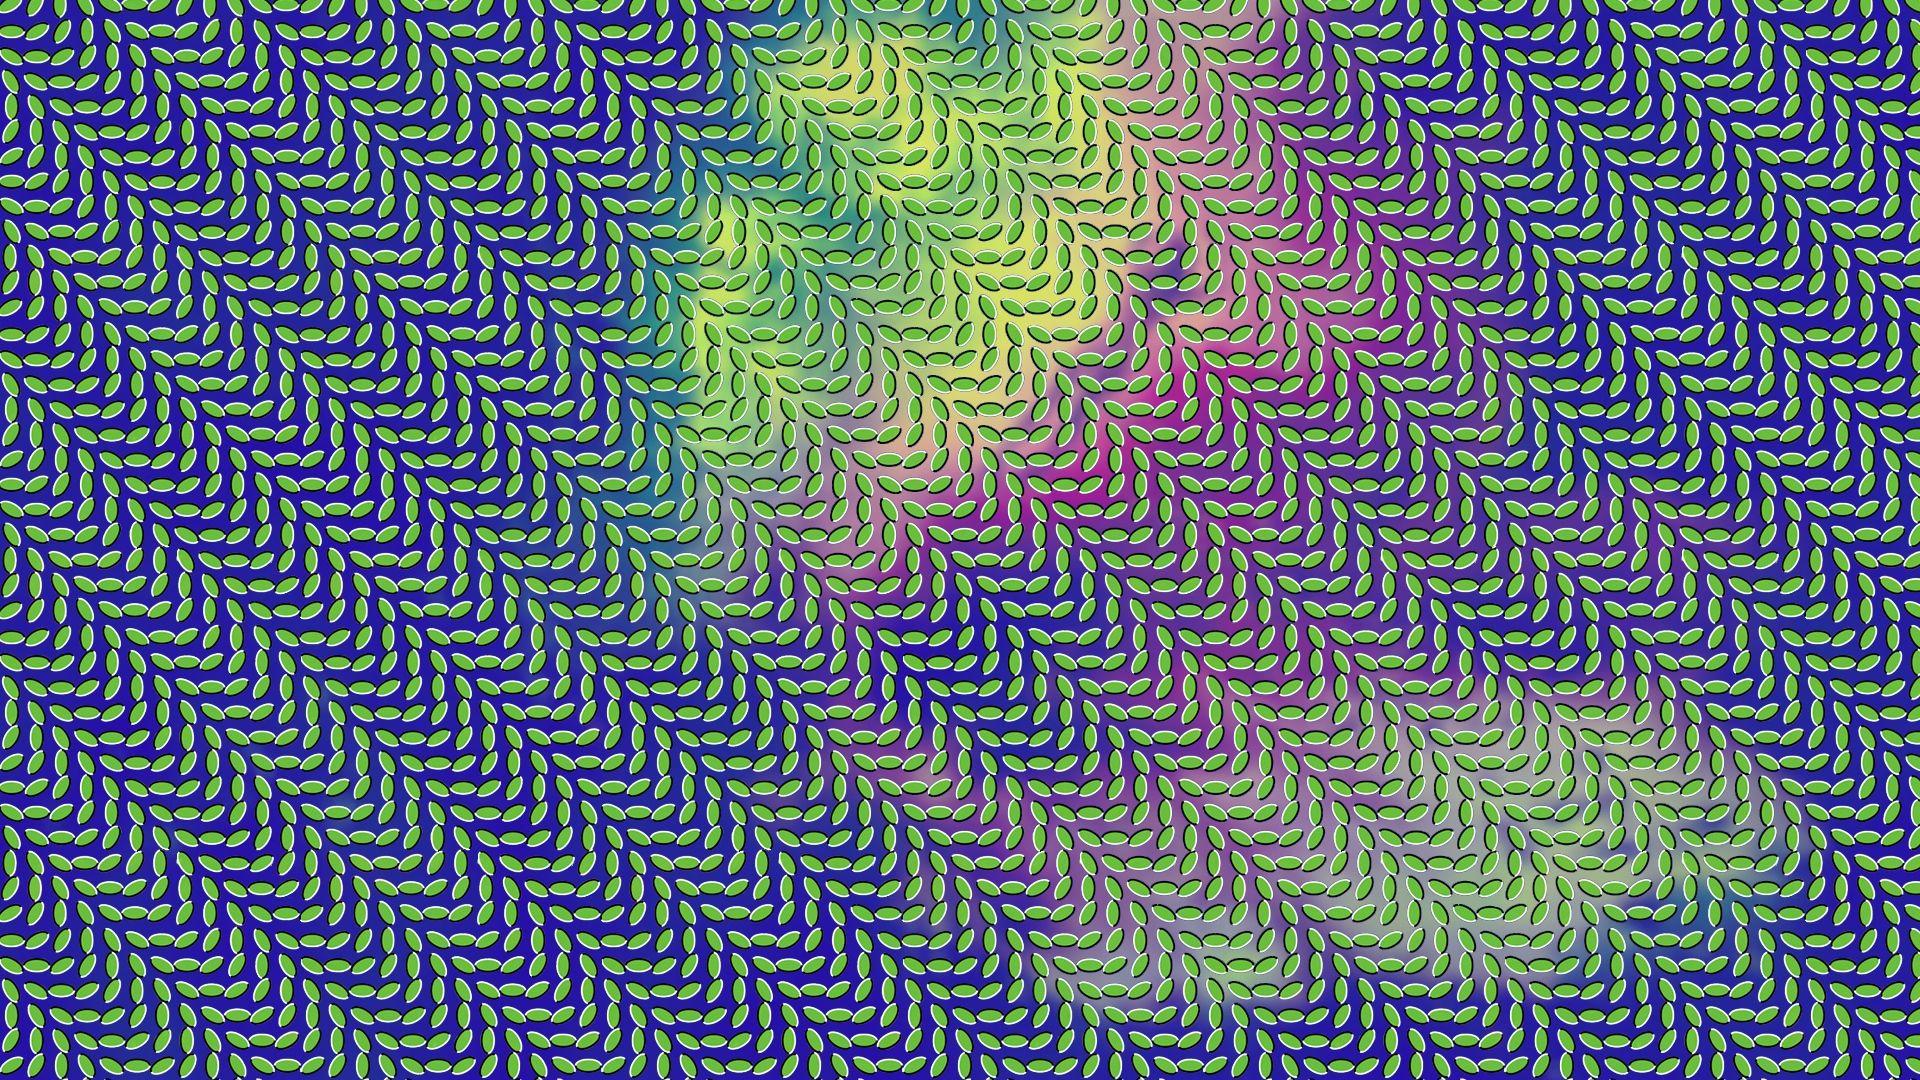 Optical Illusion Full HQ Wallpaper Free Download. Beautiful image